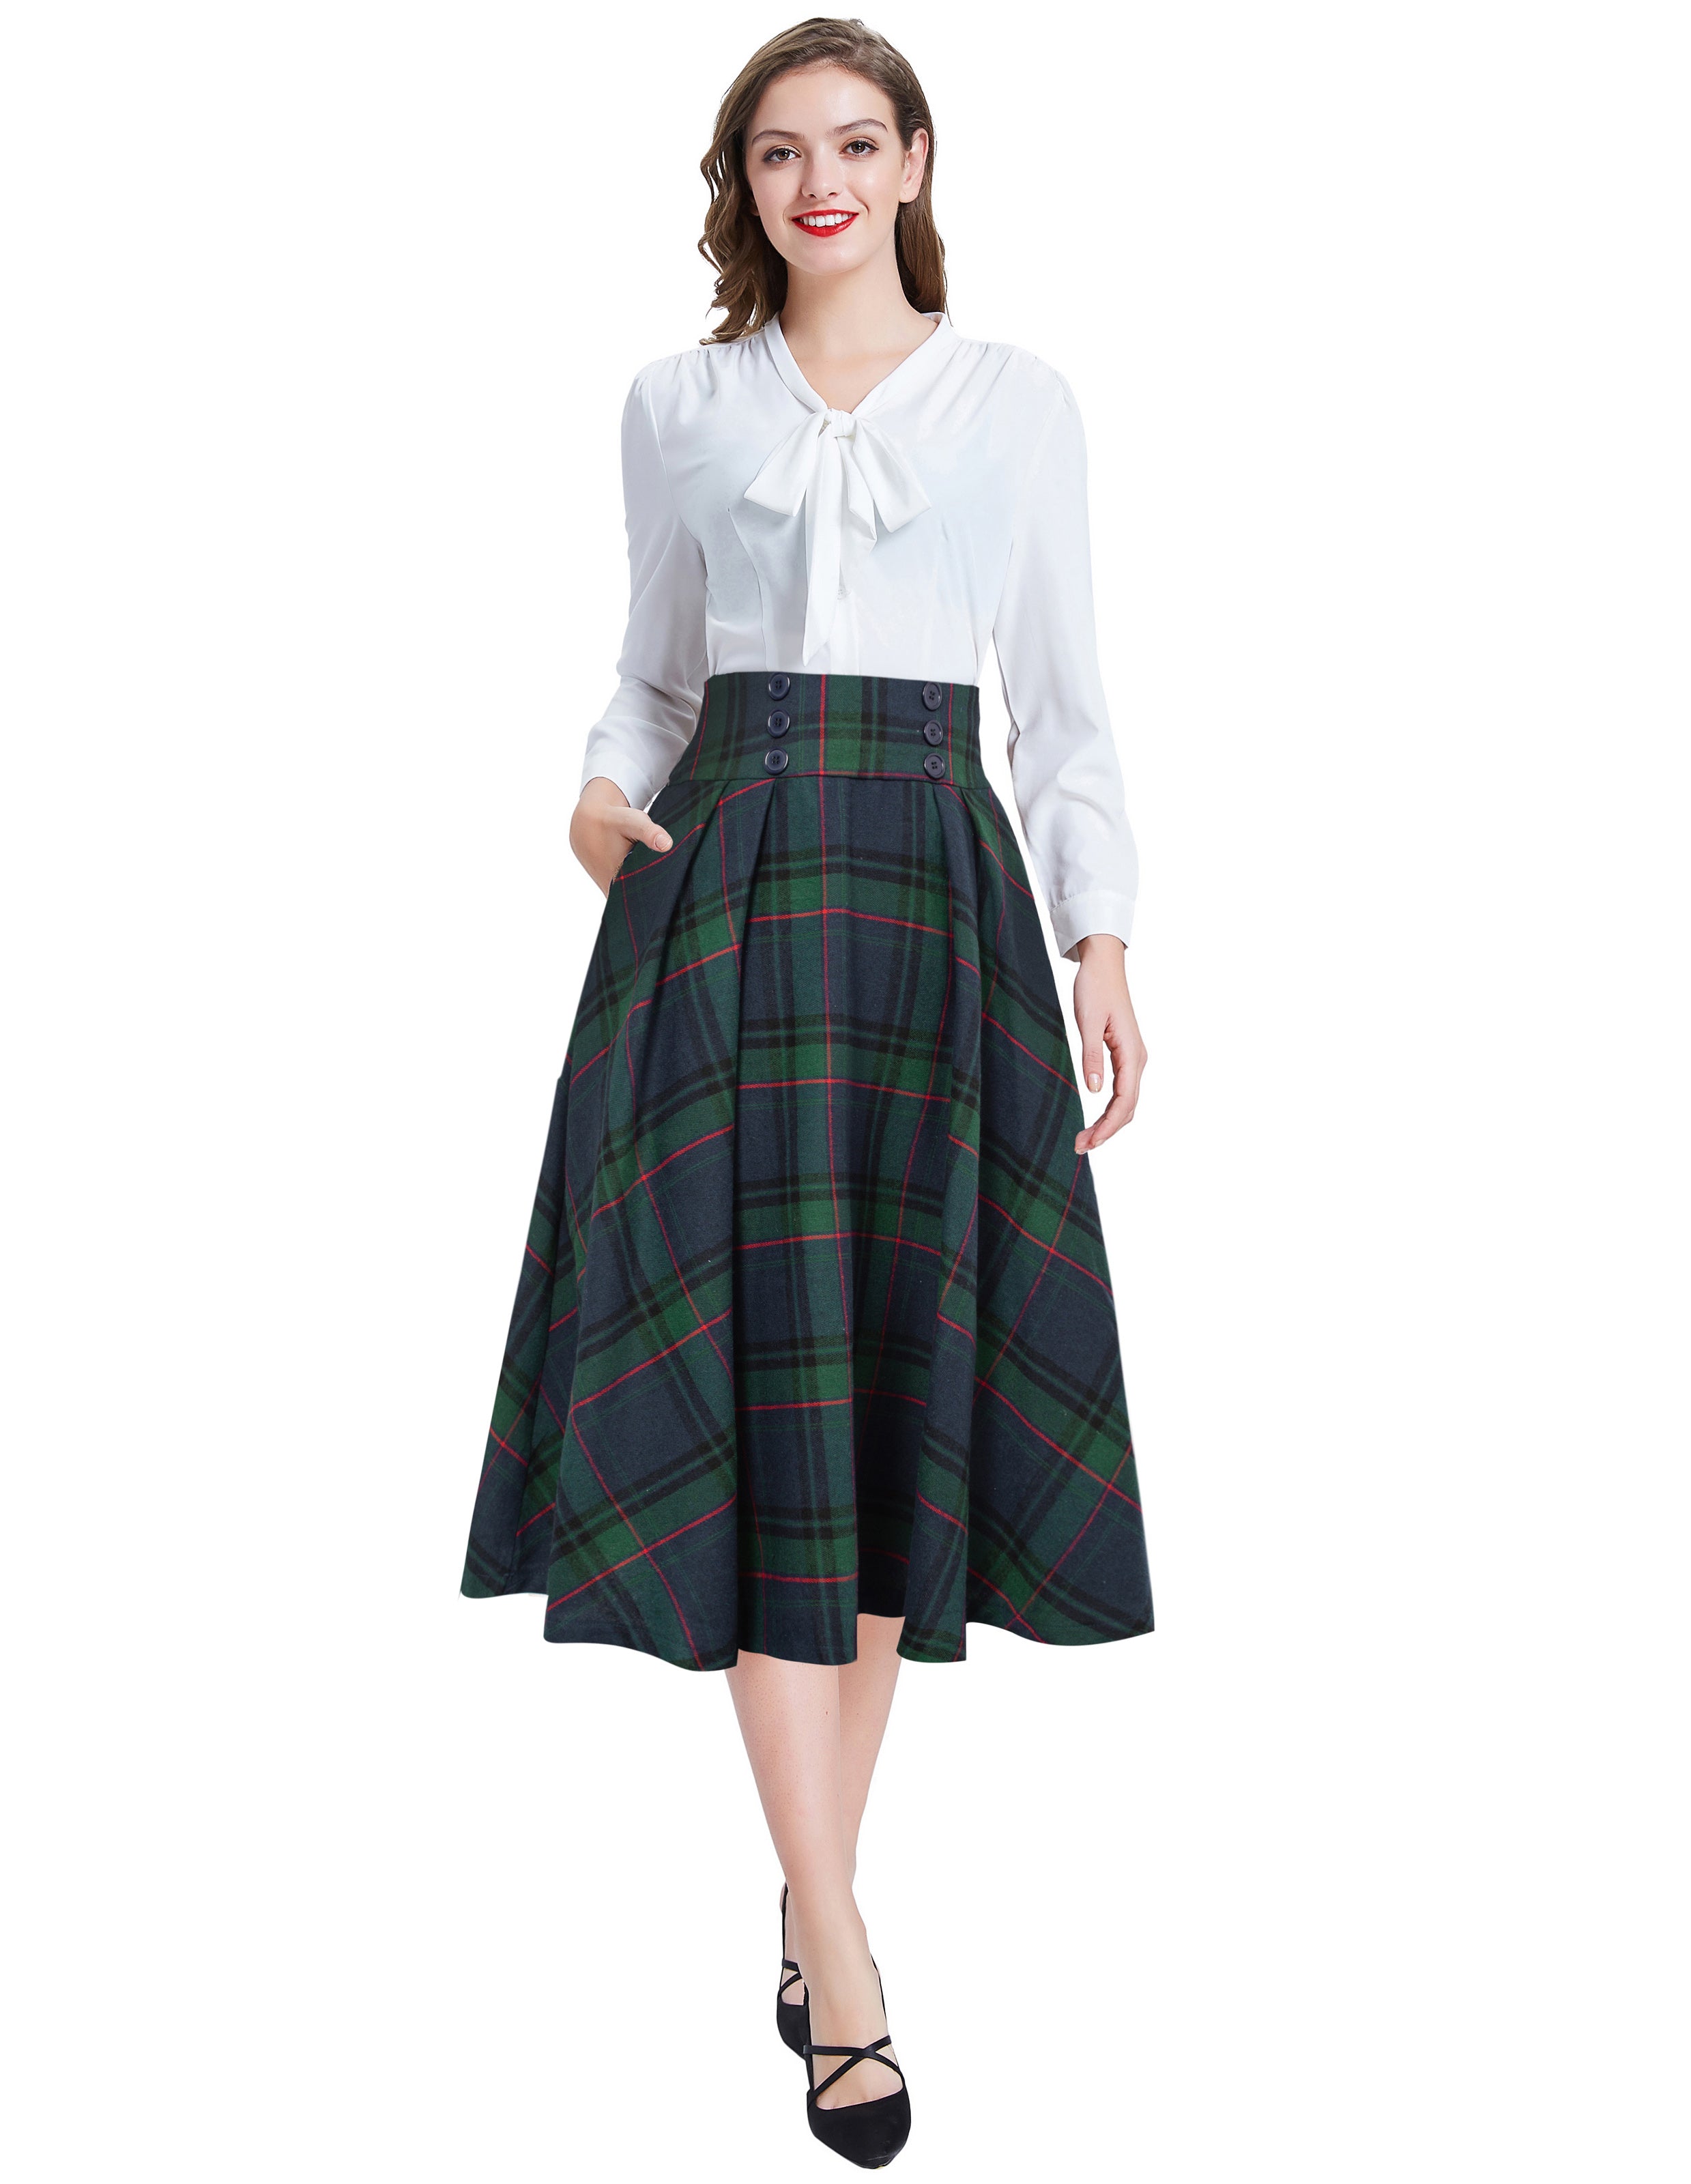 Women Plaid Skirt Vintage High Waist Pleated Skirt with Pockets